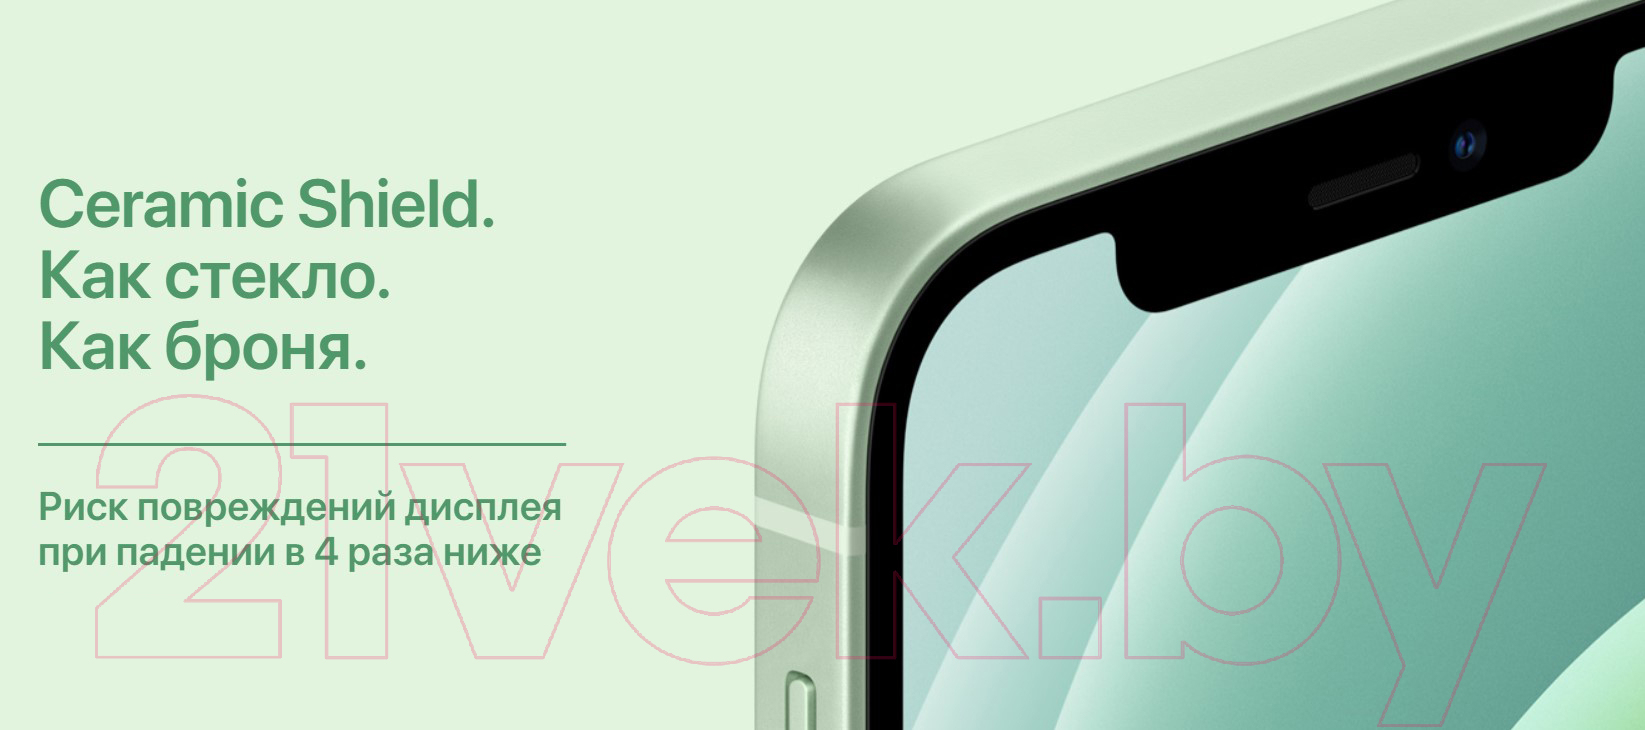 Apple iPhone 12 128GB MGJE3 / MGHX3 (синий) Смартфон 2 SIM-карты купить в  Минске, Гомеле, Витебске, Могилеве, Бресте, Гродно